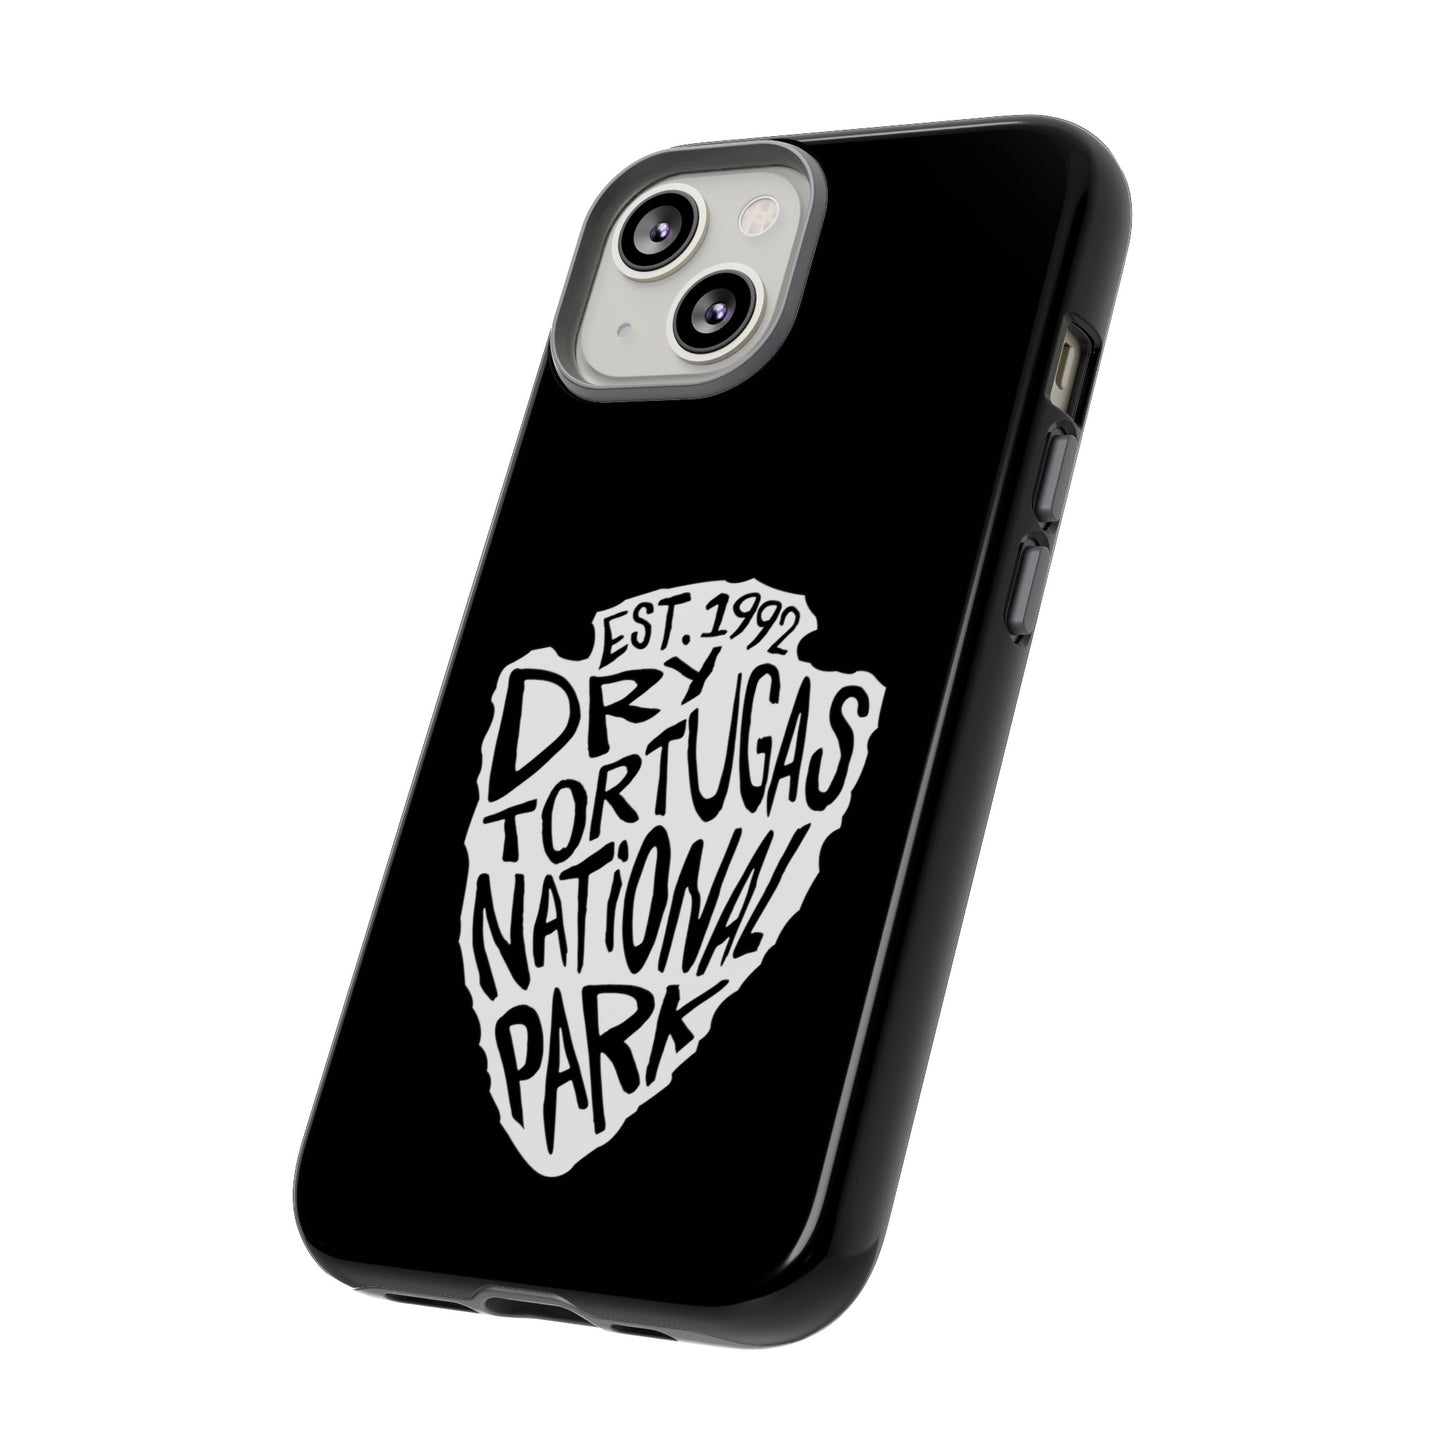 Dry Tortugas National Park Phone Case - Arrowhead Design